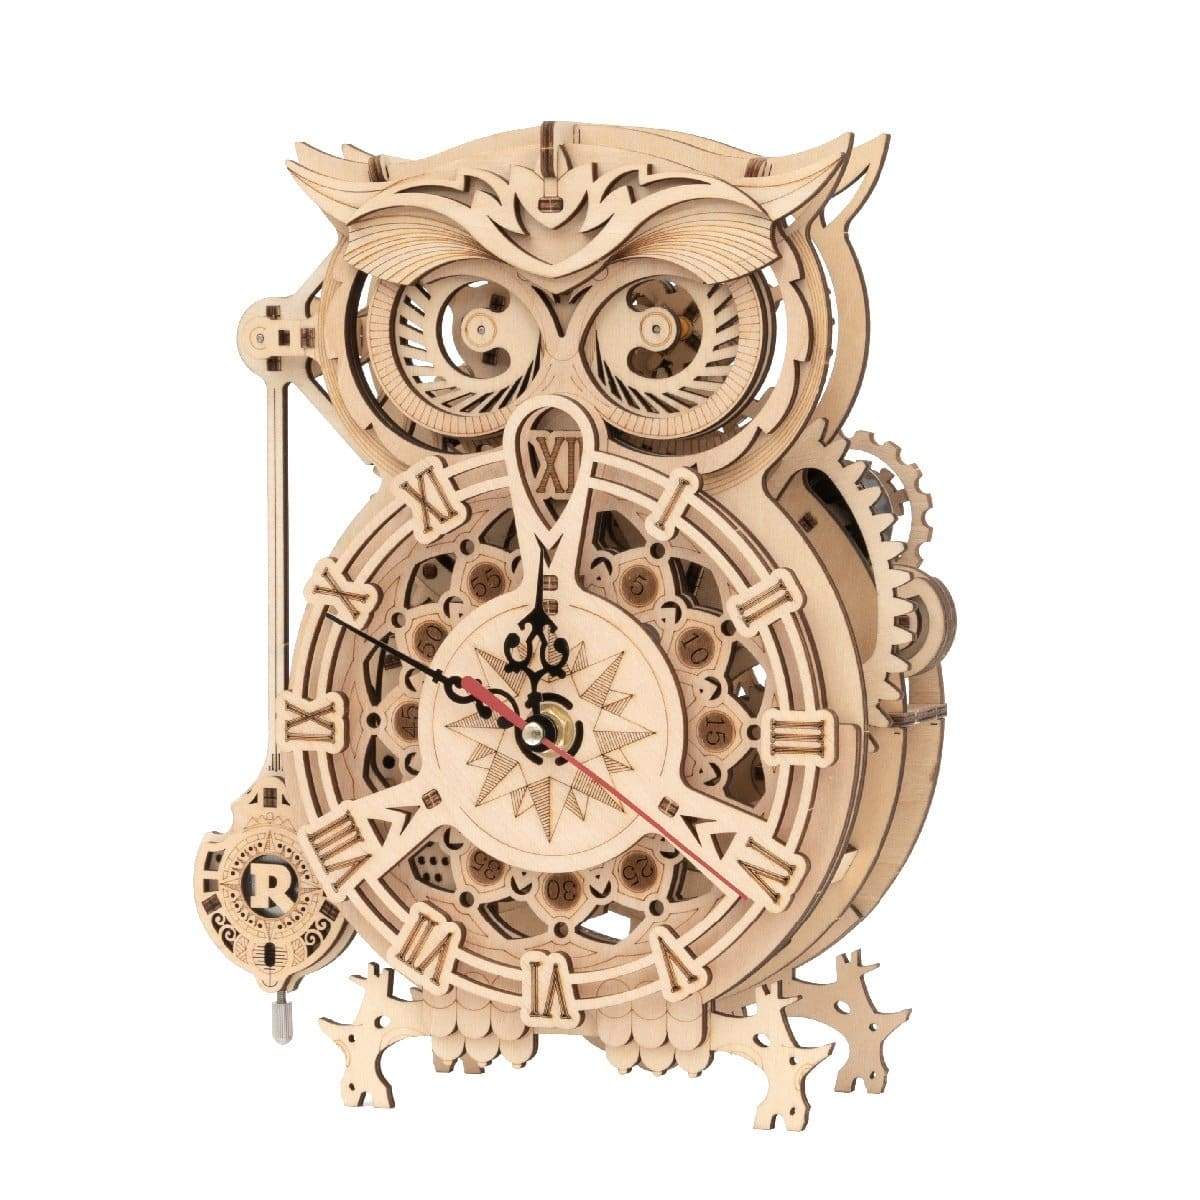 DIY Owl Clock Hands Craft Projects/Kits